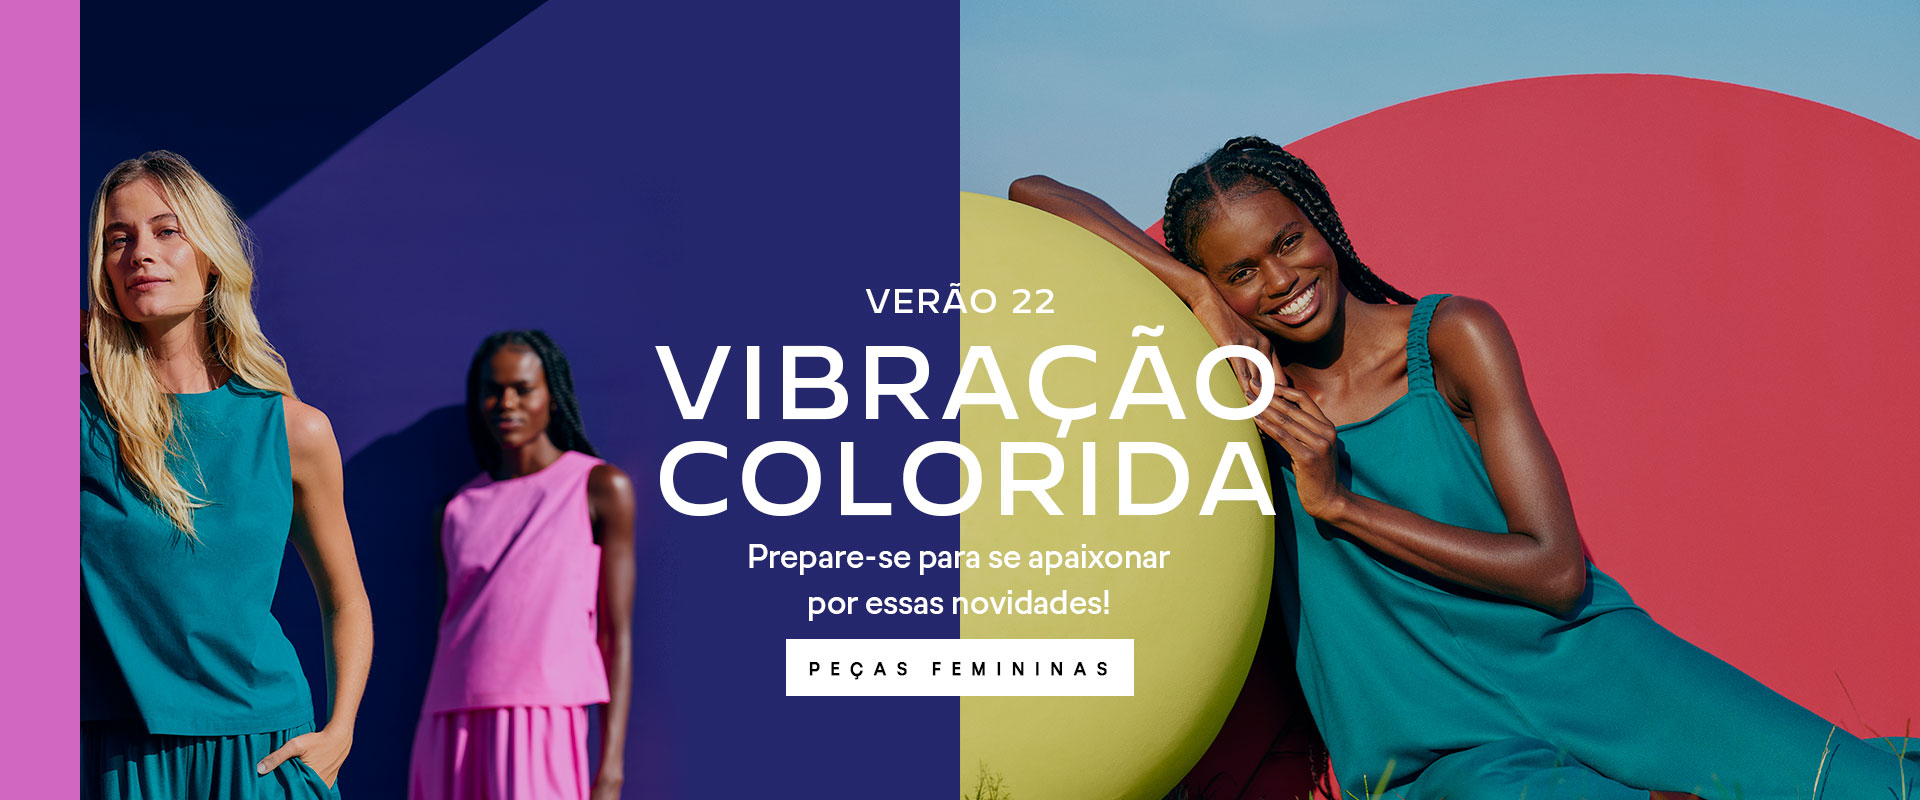 TV-Banner-Vibraçao-Colorida - TV-Banner-Vibraçao-Colorida